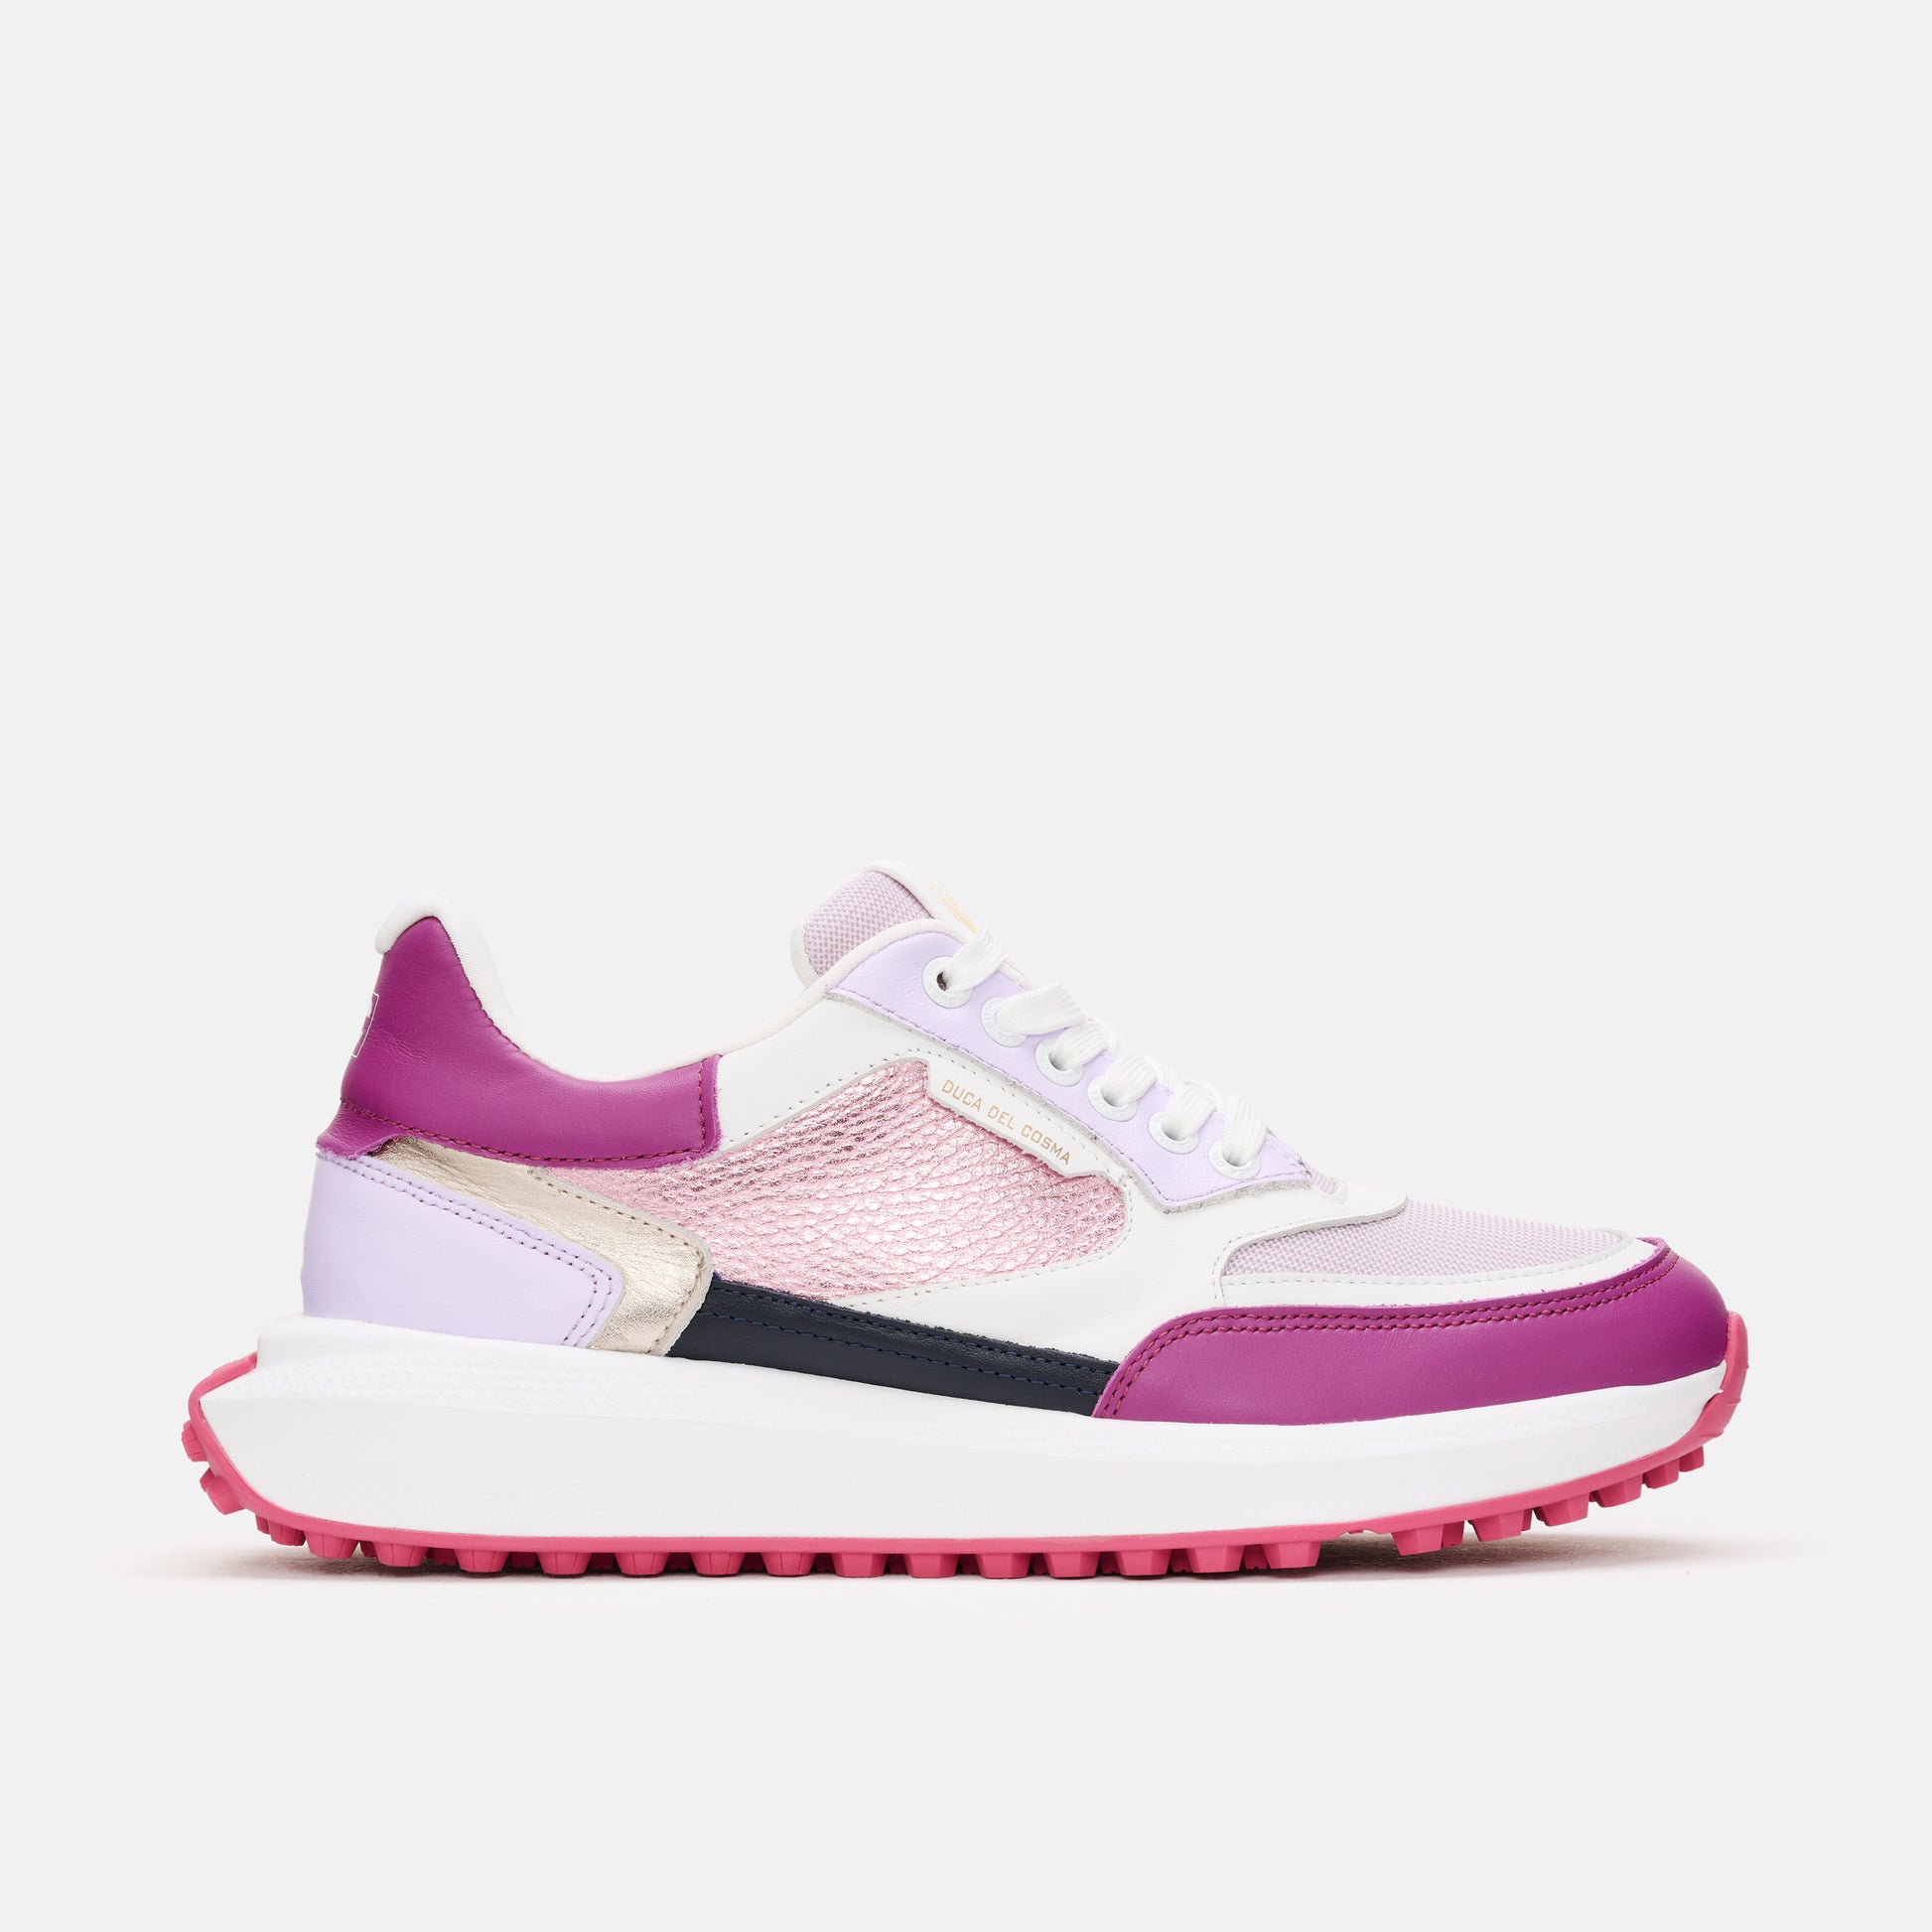 olivera Lilac Golf Shoe